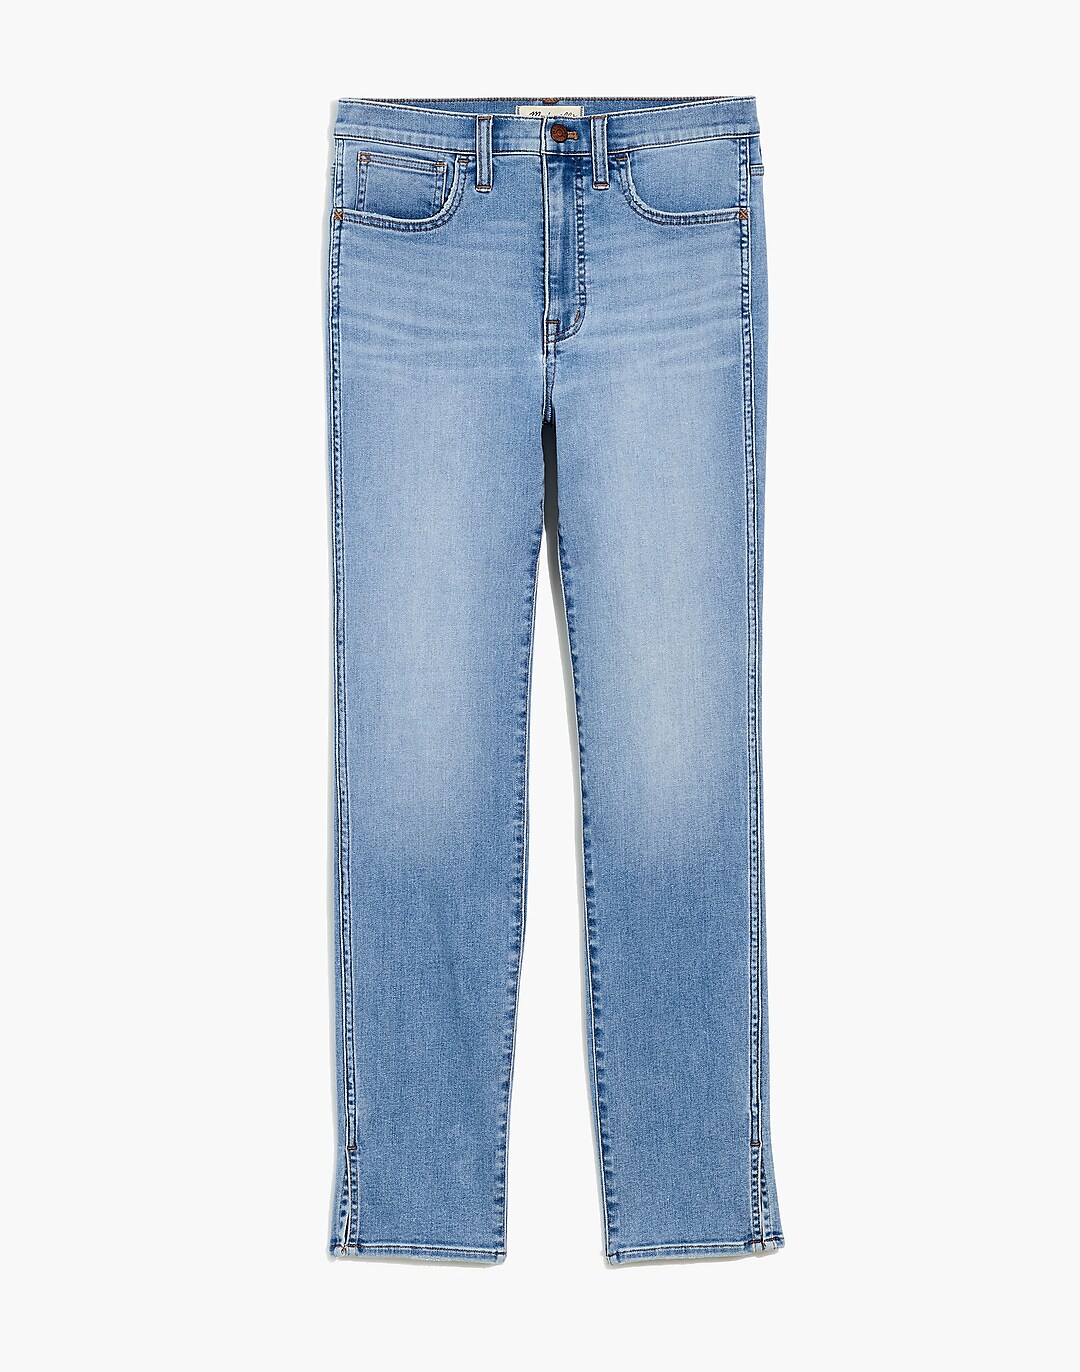 High-Rise Slim Straight Jeans in Edition Wash: Stillwood Slit-Hem